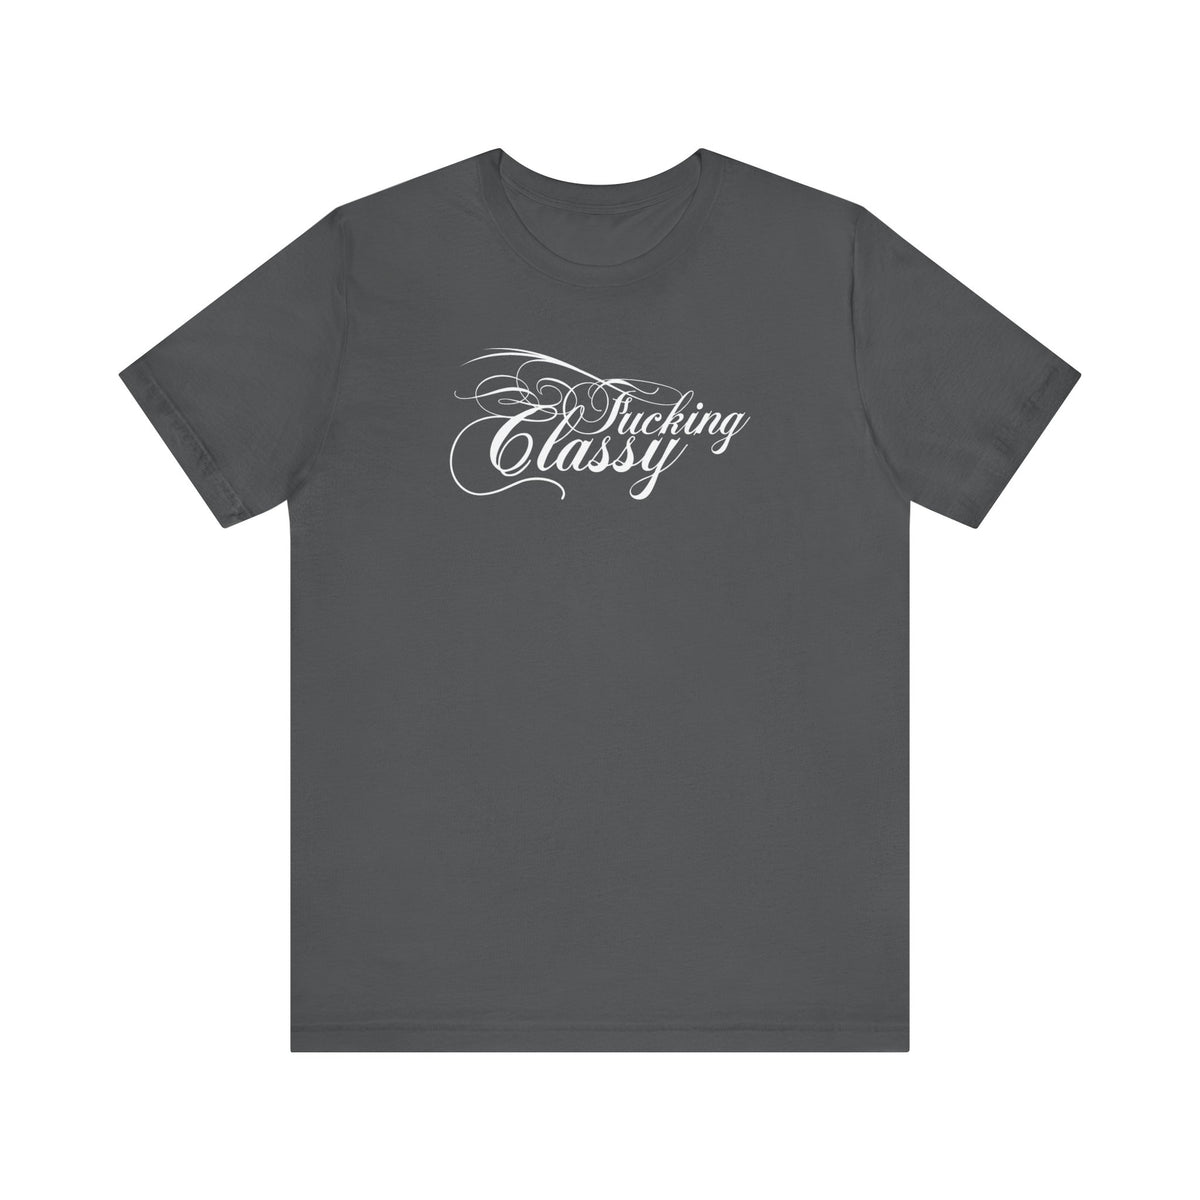 Fucking Classy - Men's T-Shirt